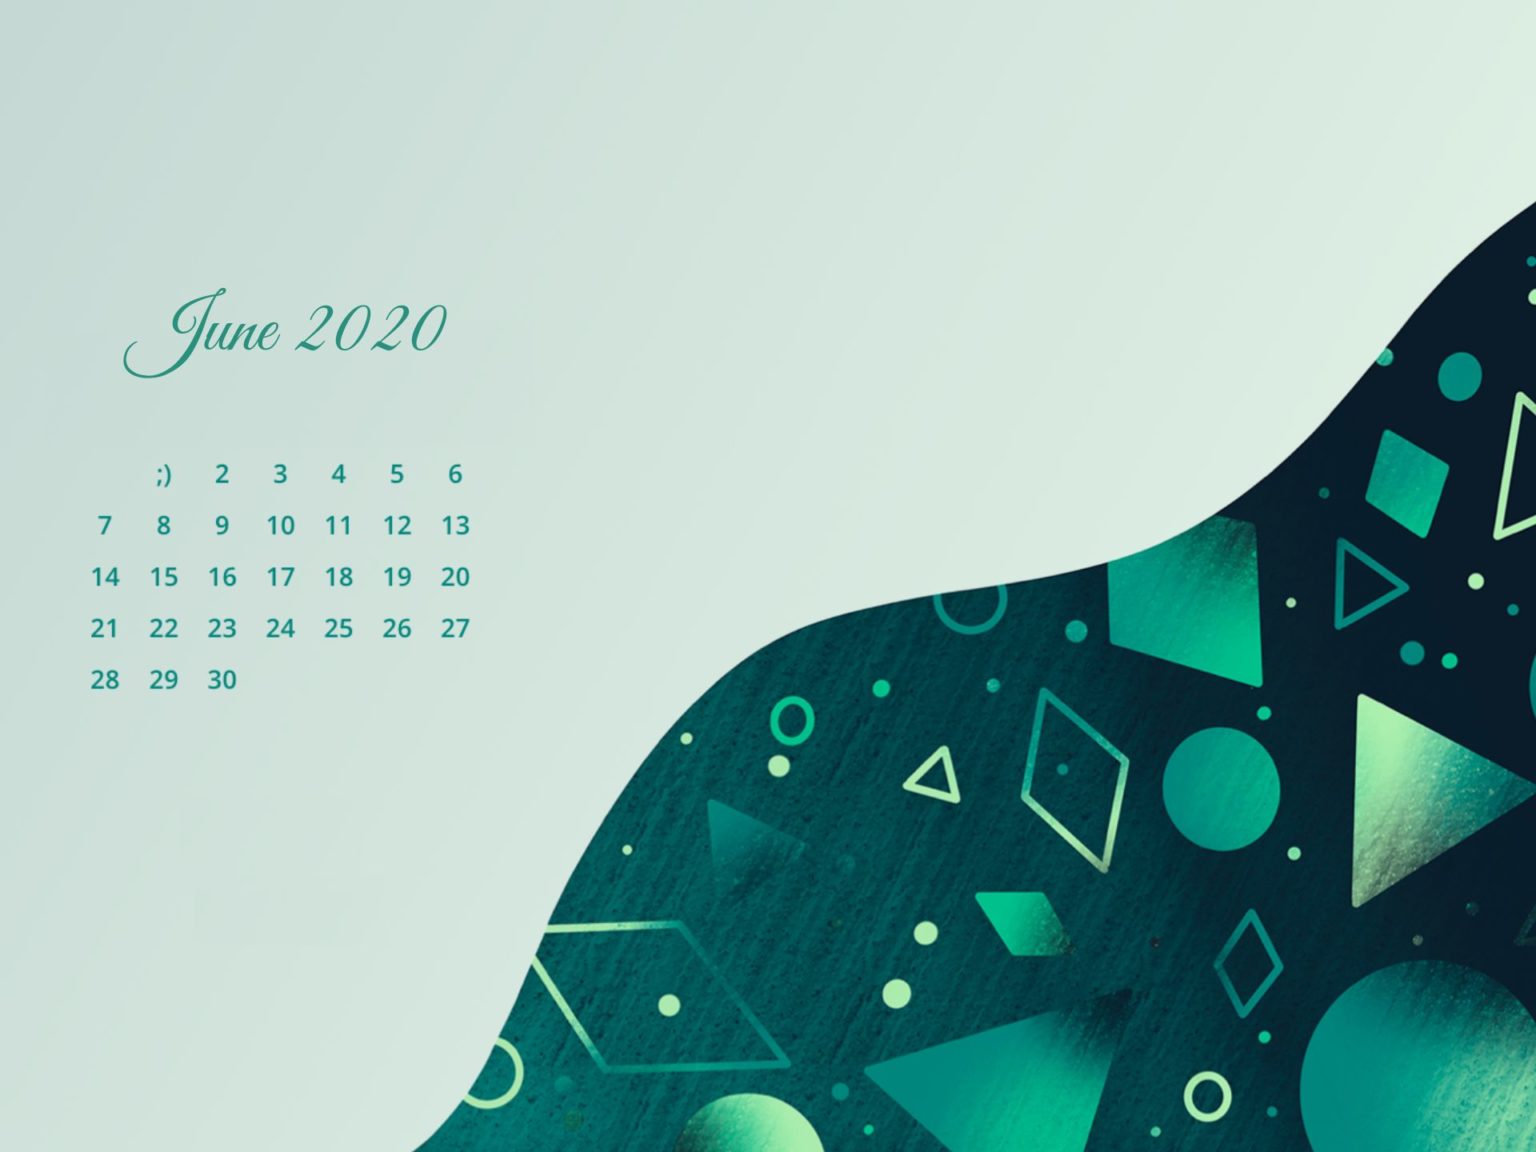 June 2020 Calendar Wallpaper